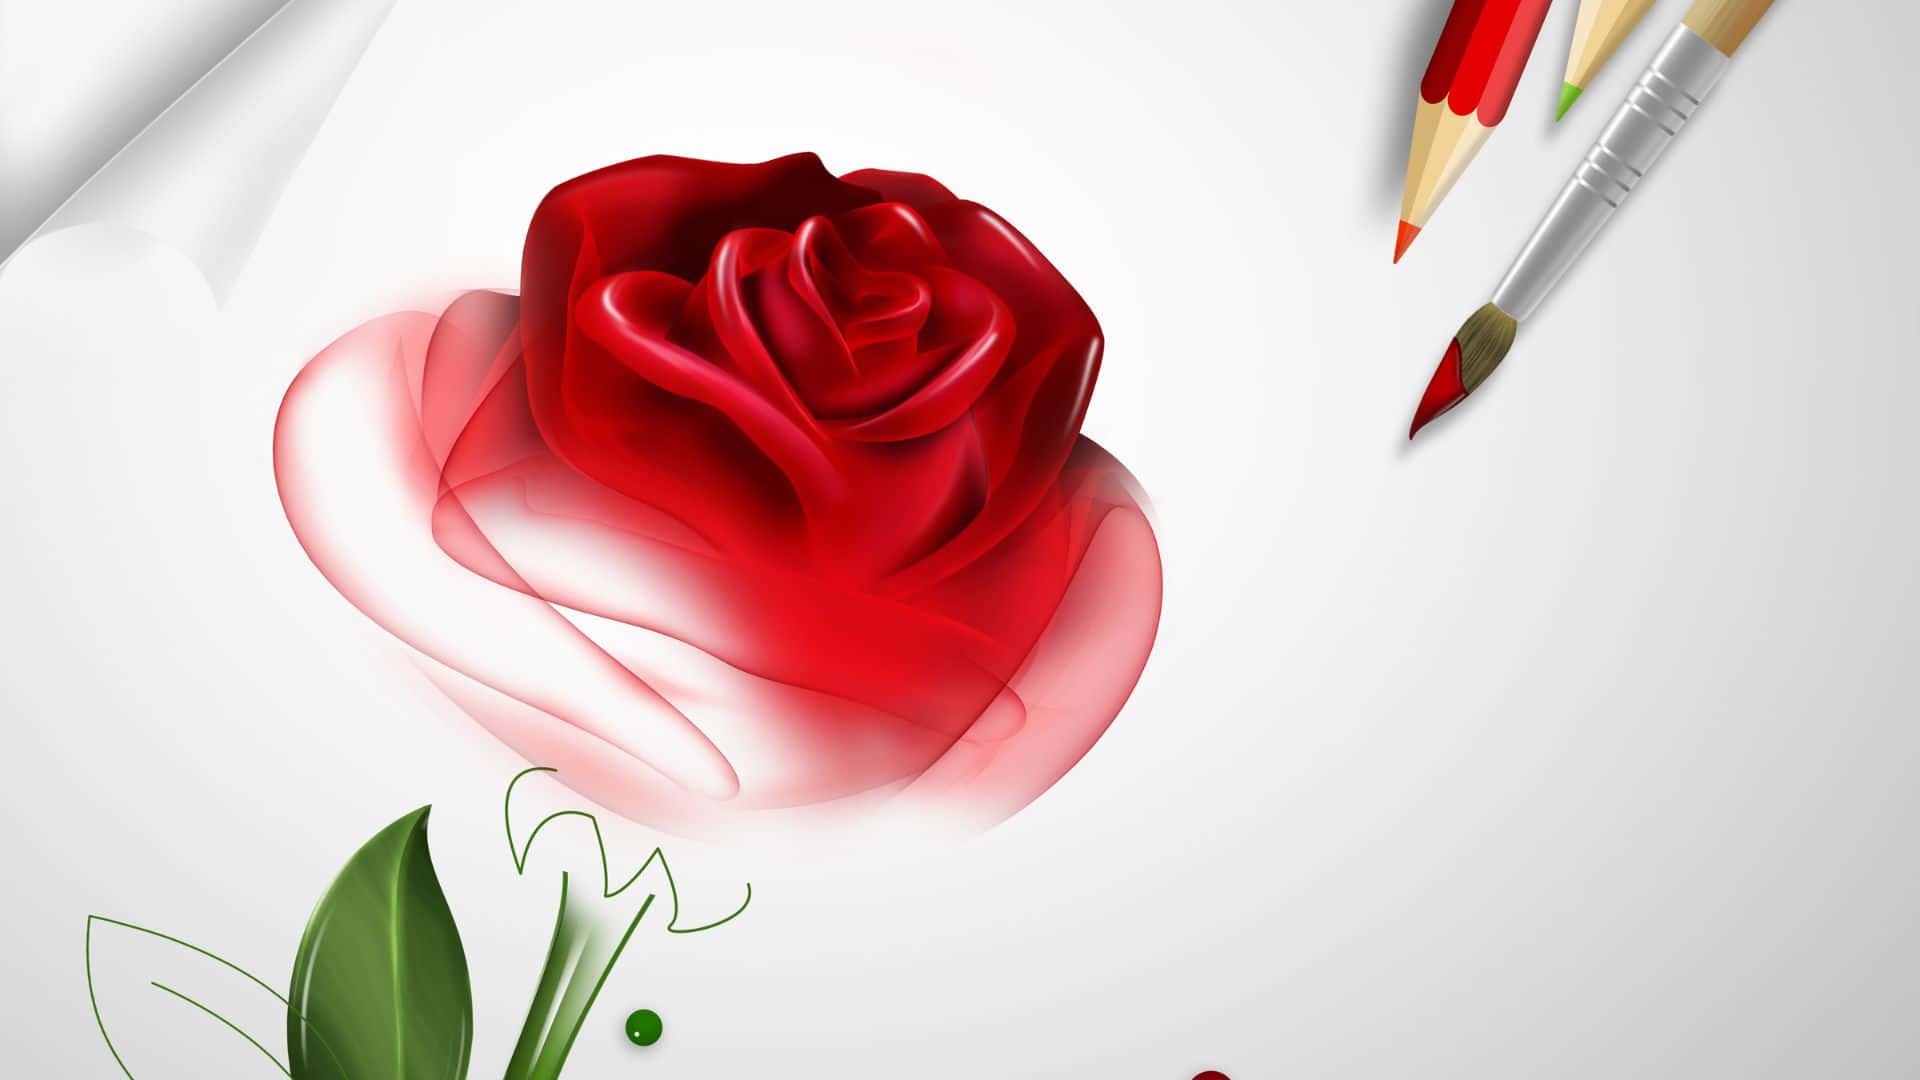 Red Rose Illustration On Progress Wallpaper